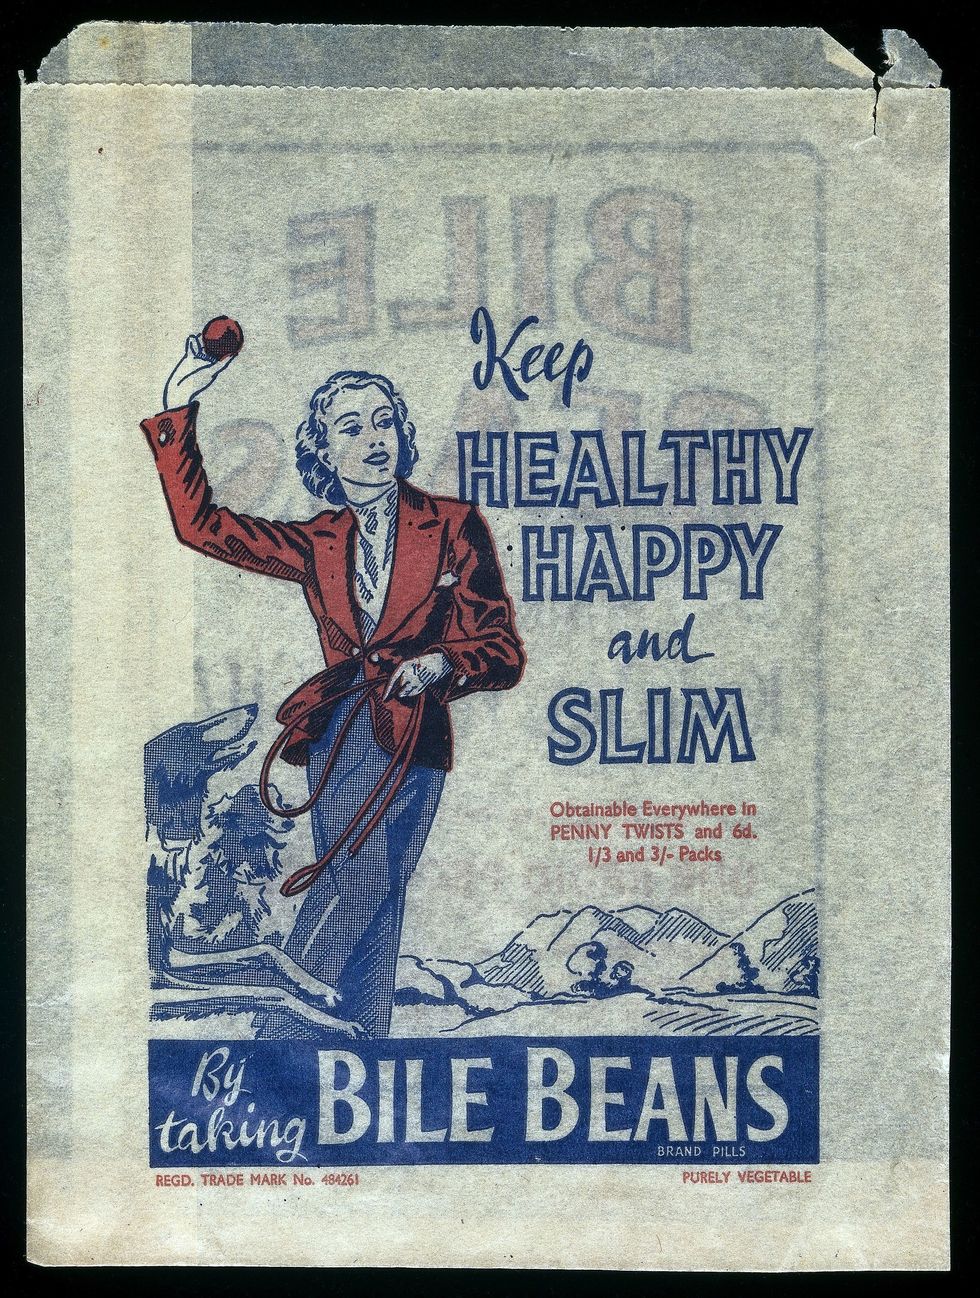 Ex Lax print ad 1933 orig vintage 30s art women's health diet fad reducing